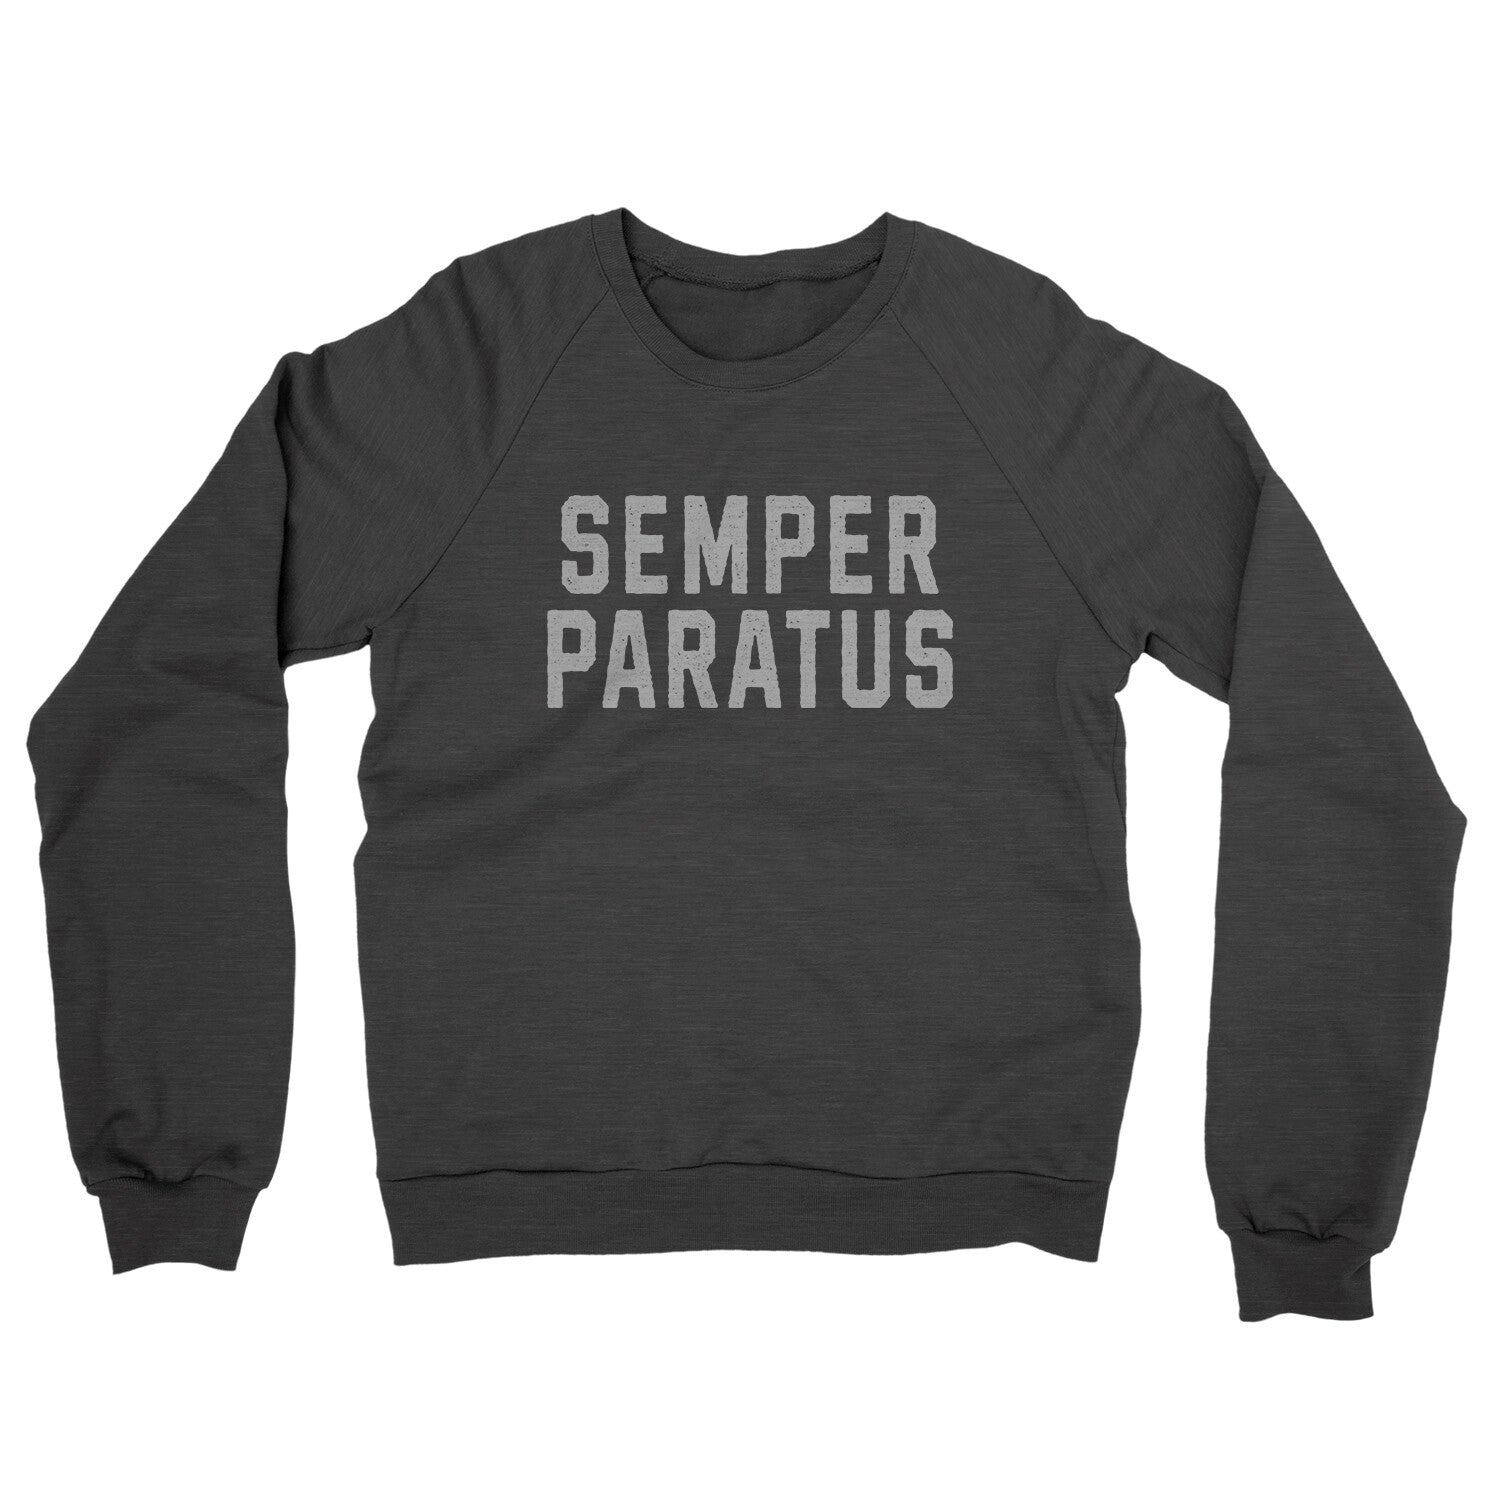 Semper Paratus in Charcoal Heather Color